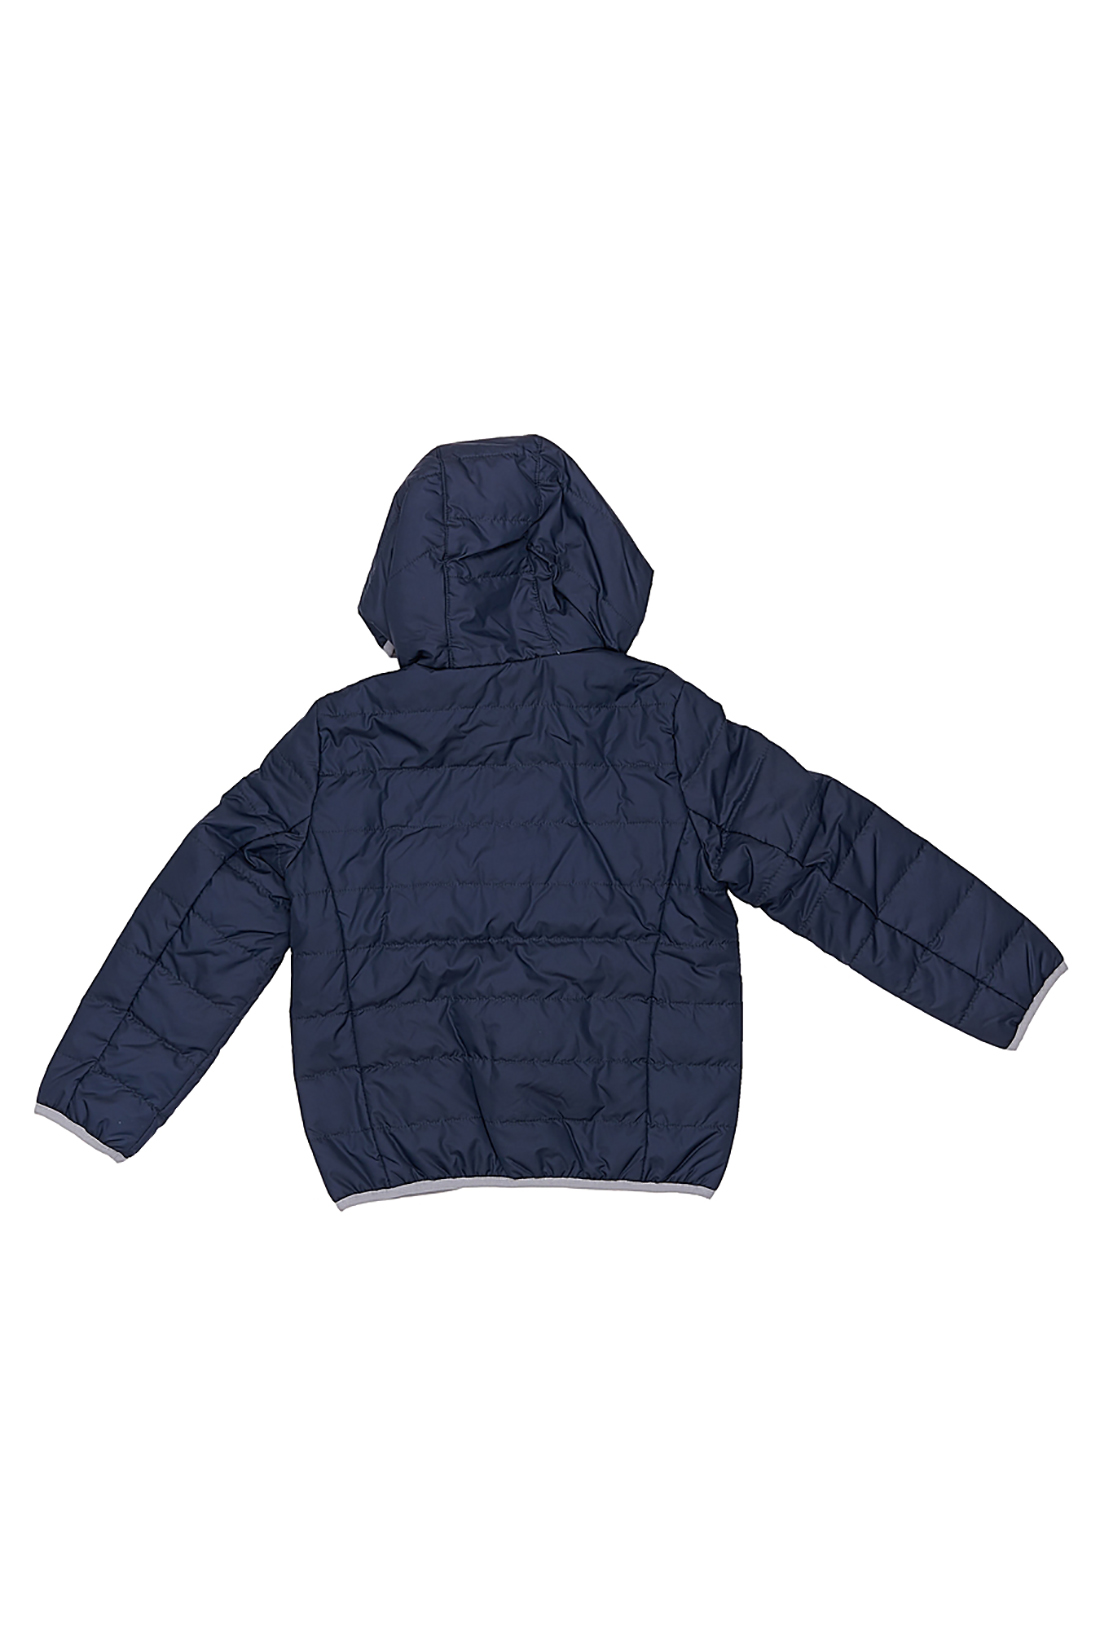 Куртка для мальчика (арт. baon BK538001), размер 110-116, цвет синий Куртка для мальчика (арт. baon BK538001) - фото 2